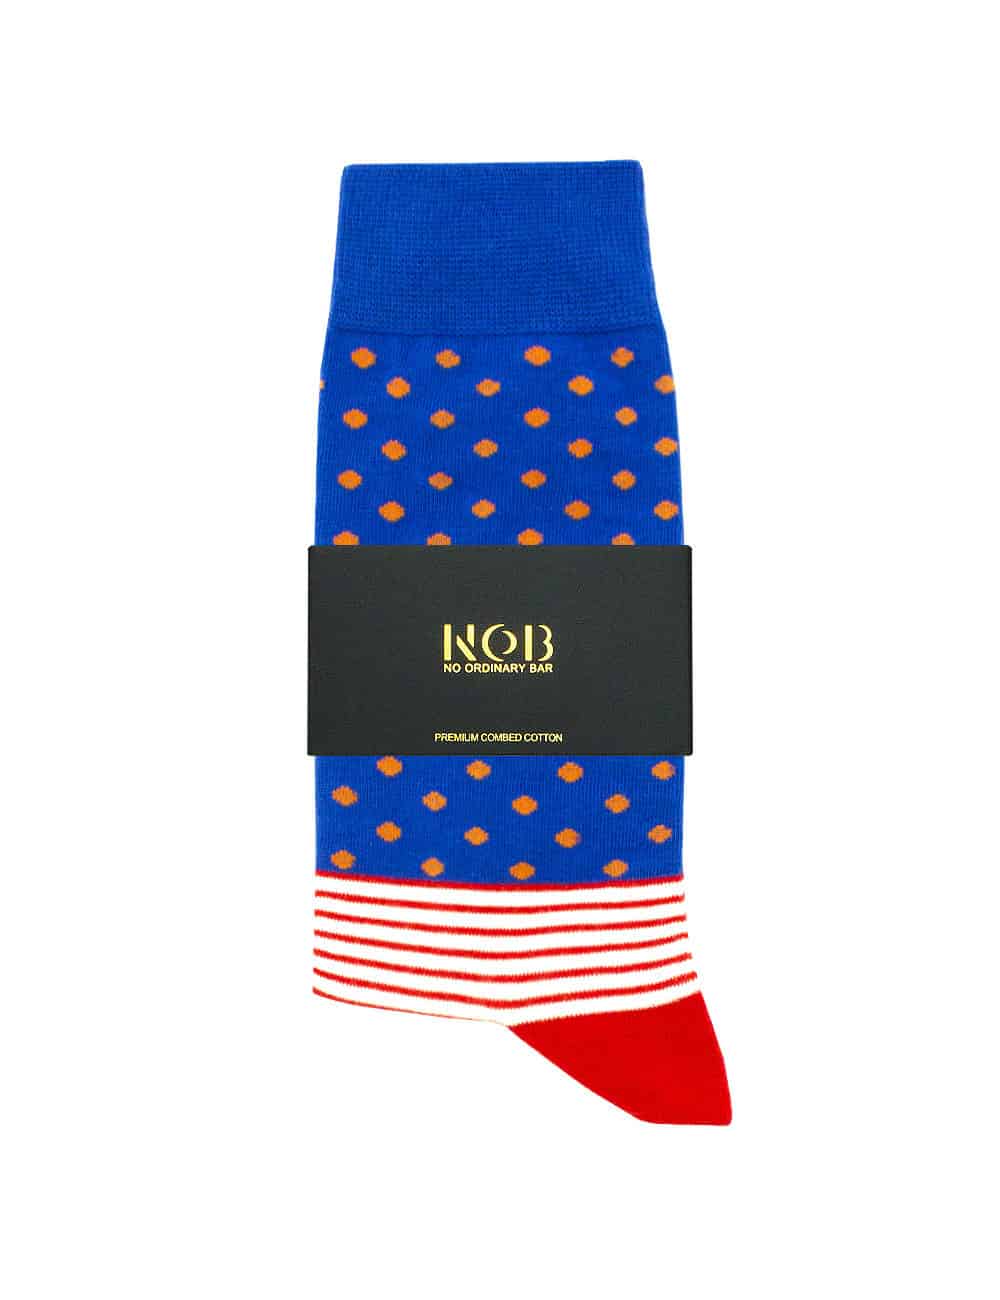 Blue with Orange Polka Dots Crew Socks made with Premium Combed Cotton SOC2B.NOB1